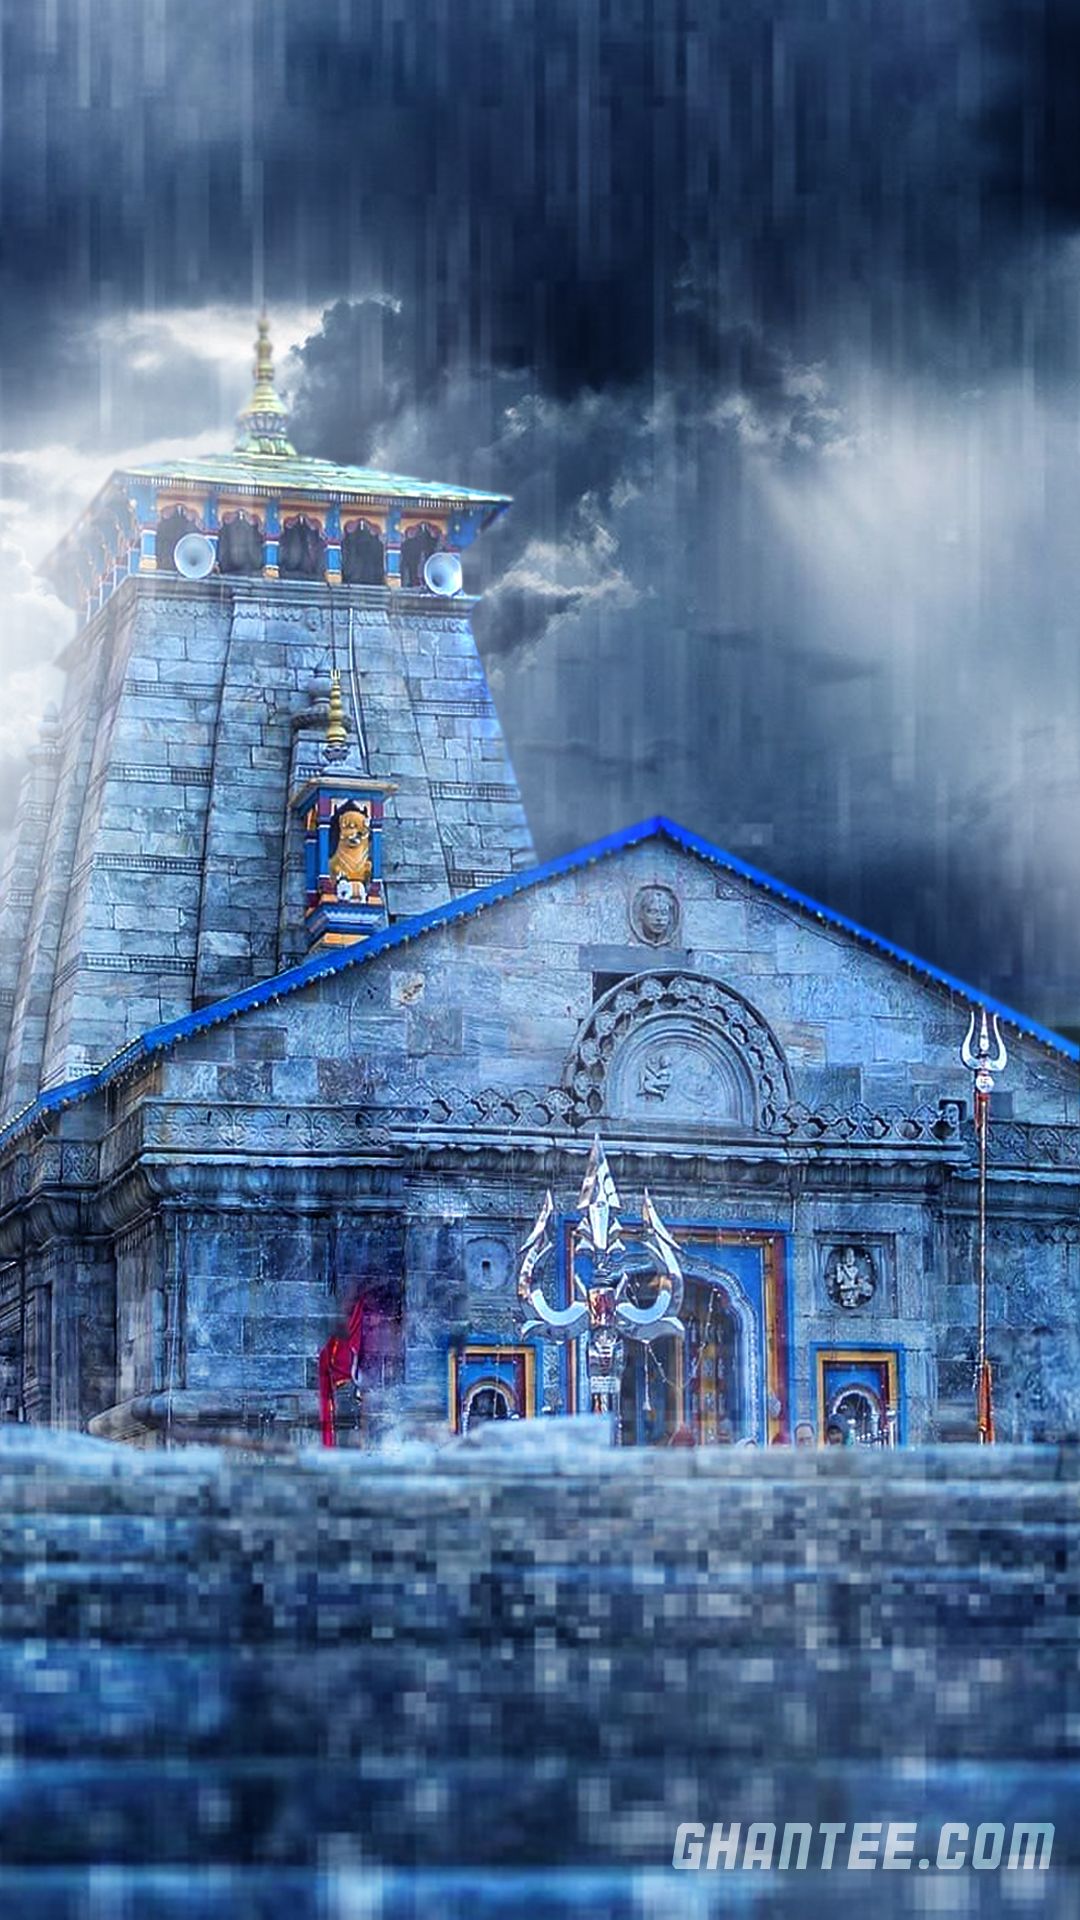 kedarnath in rain HD wallpaper for mobile devices